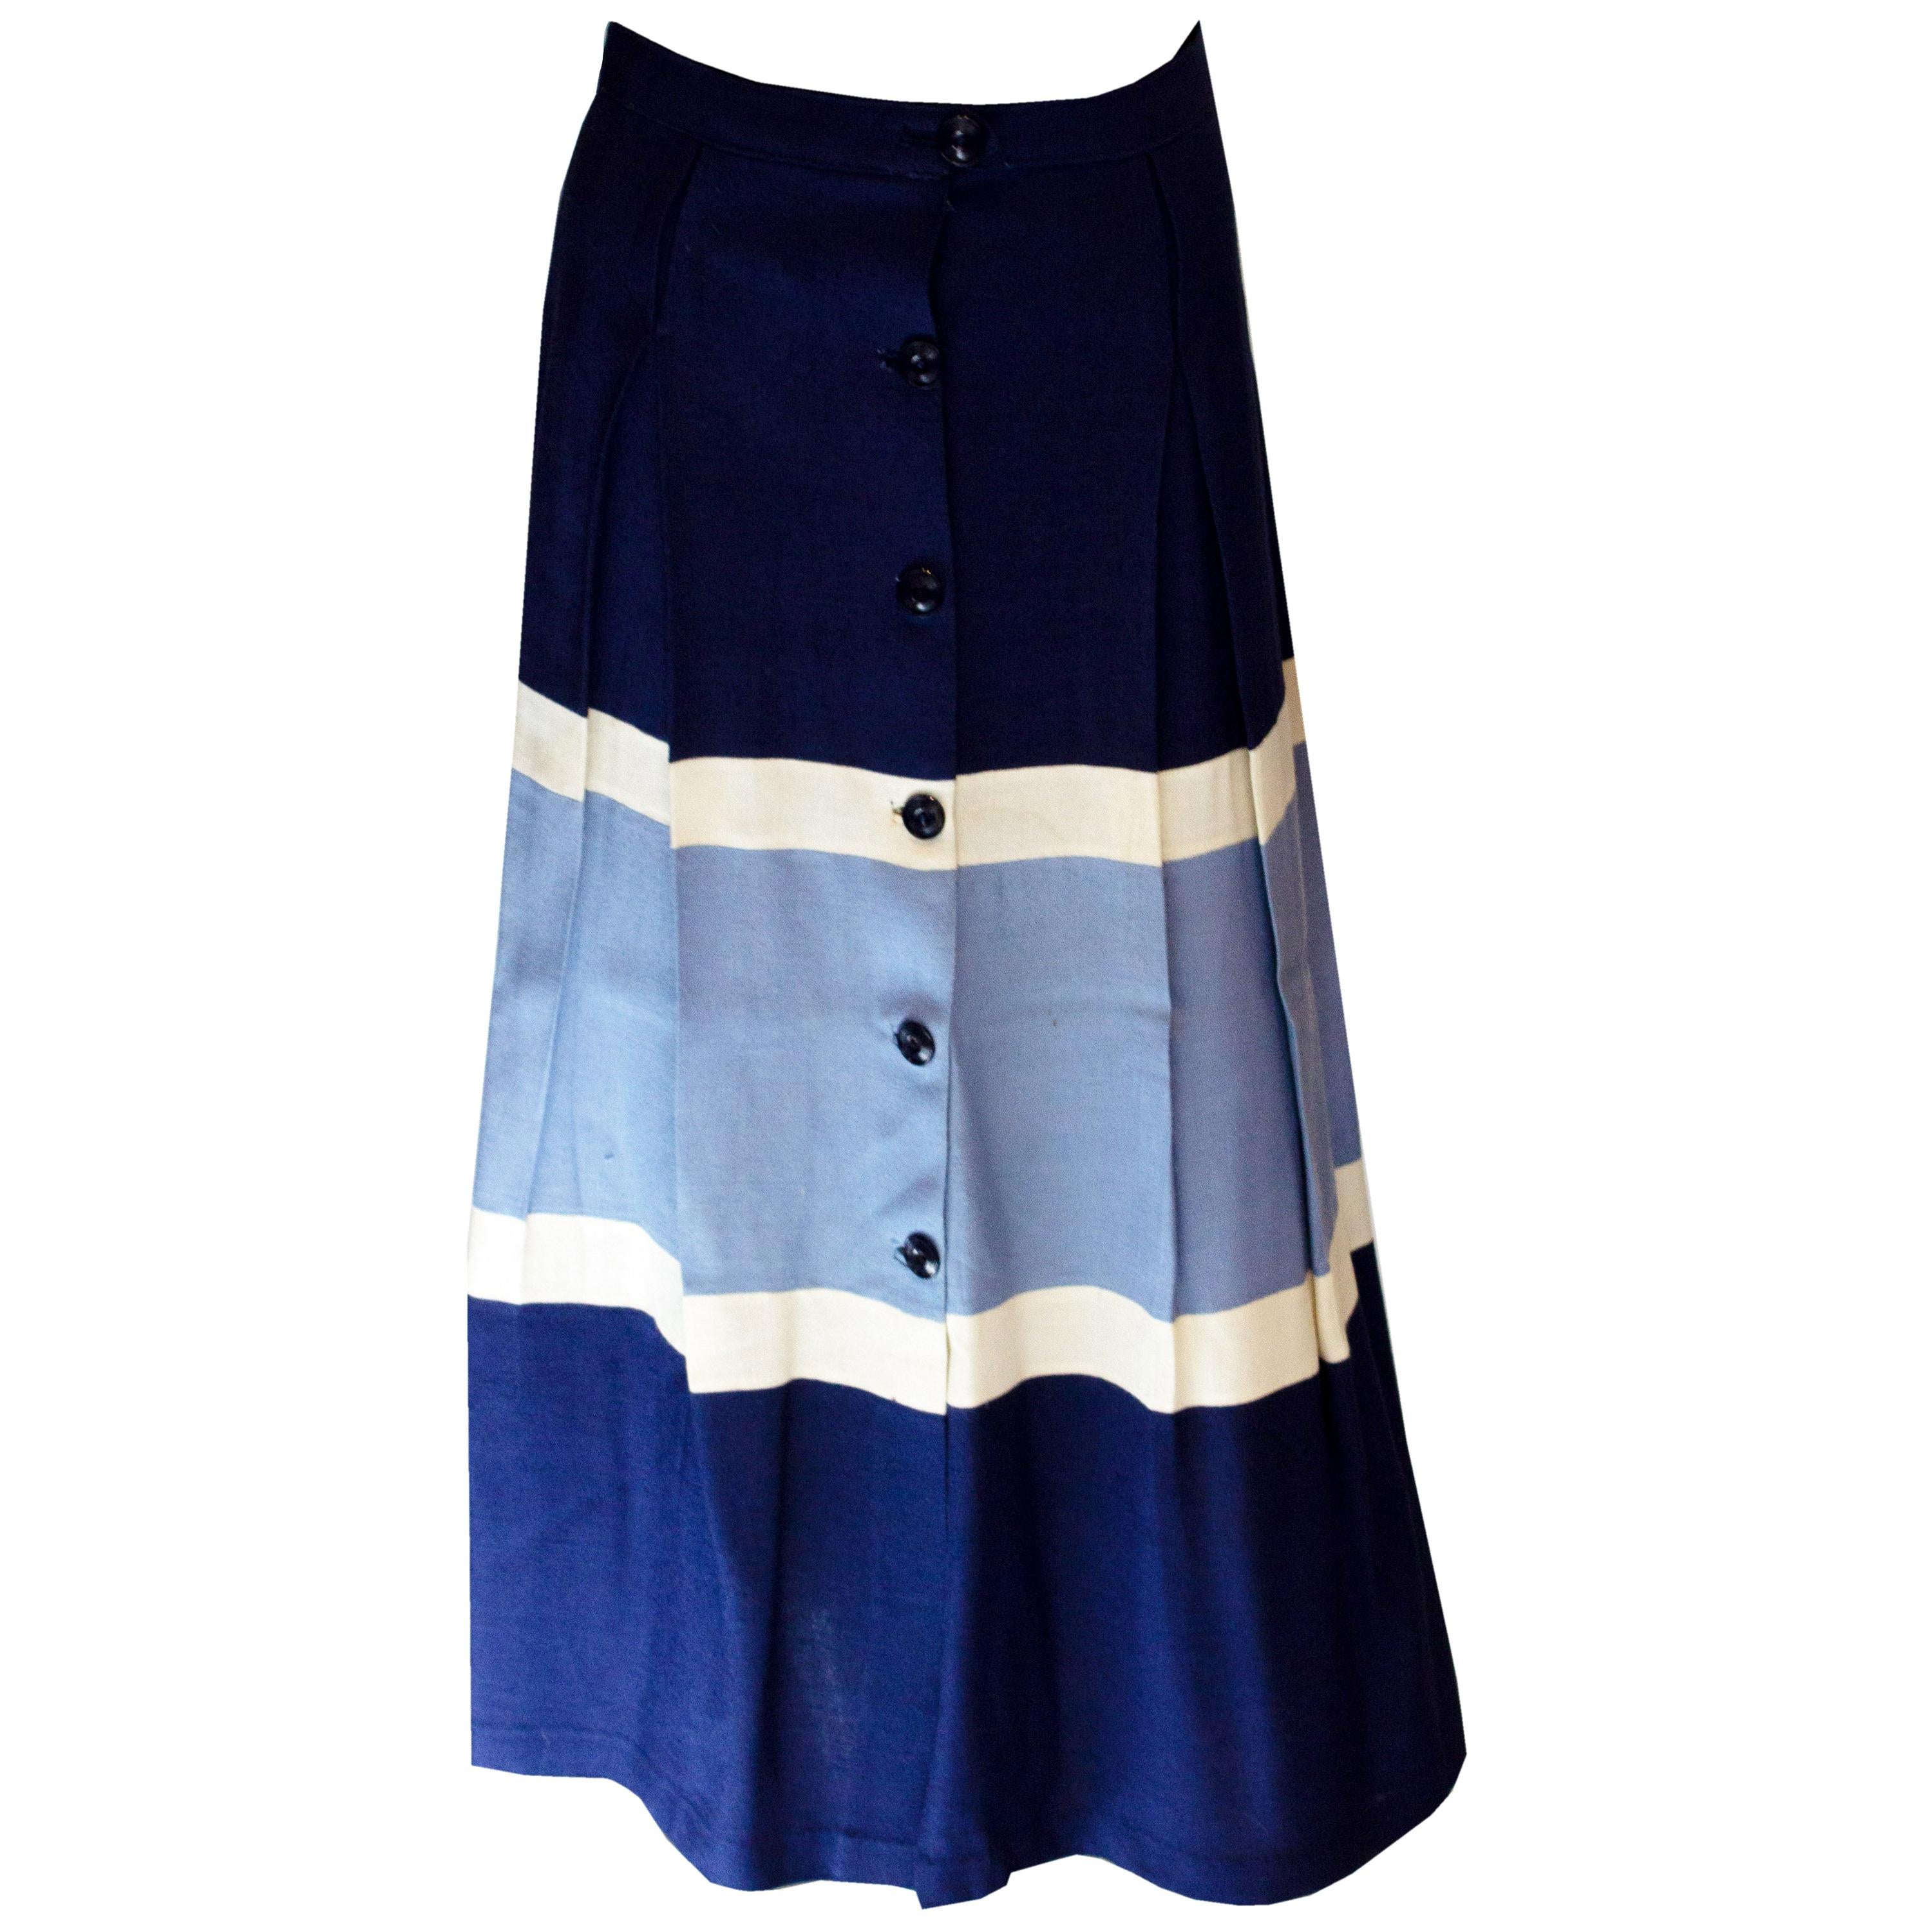 Vintage Blue and White skirt